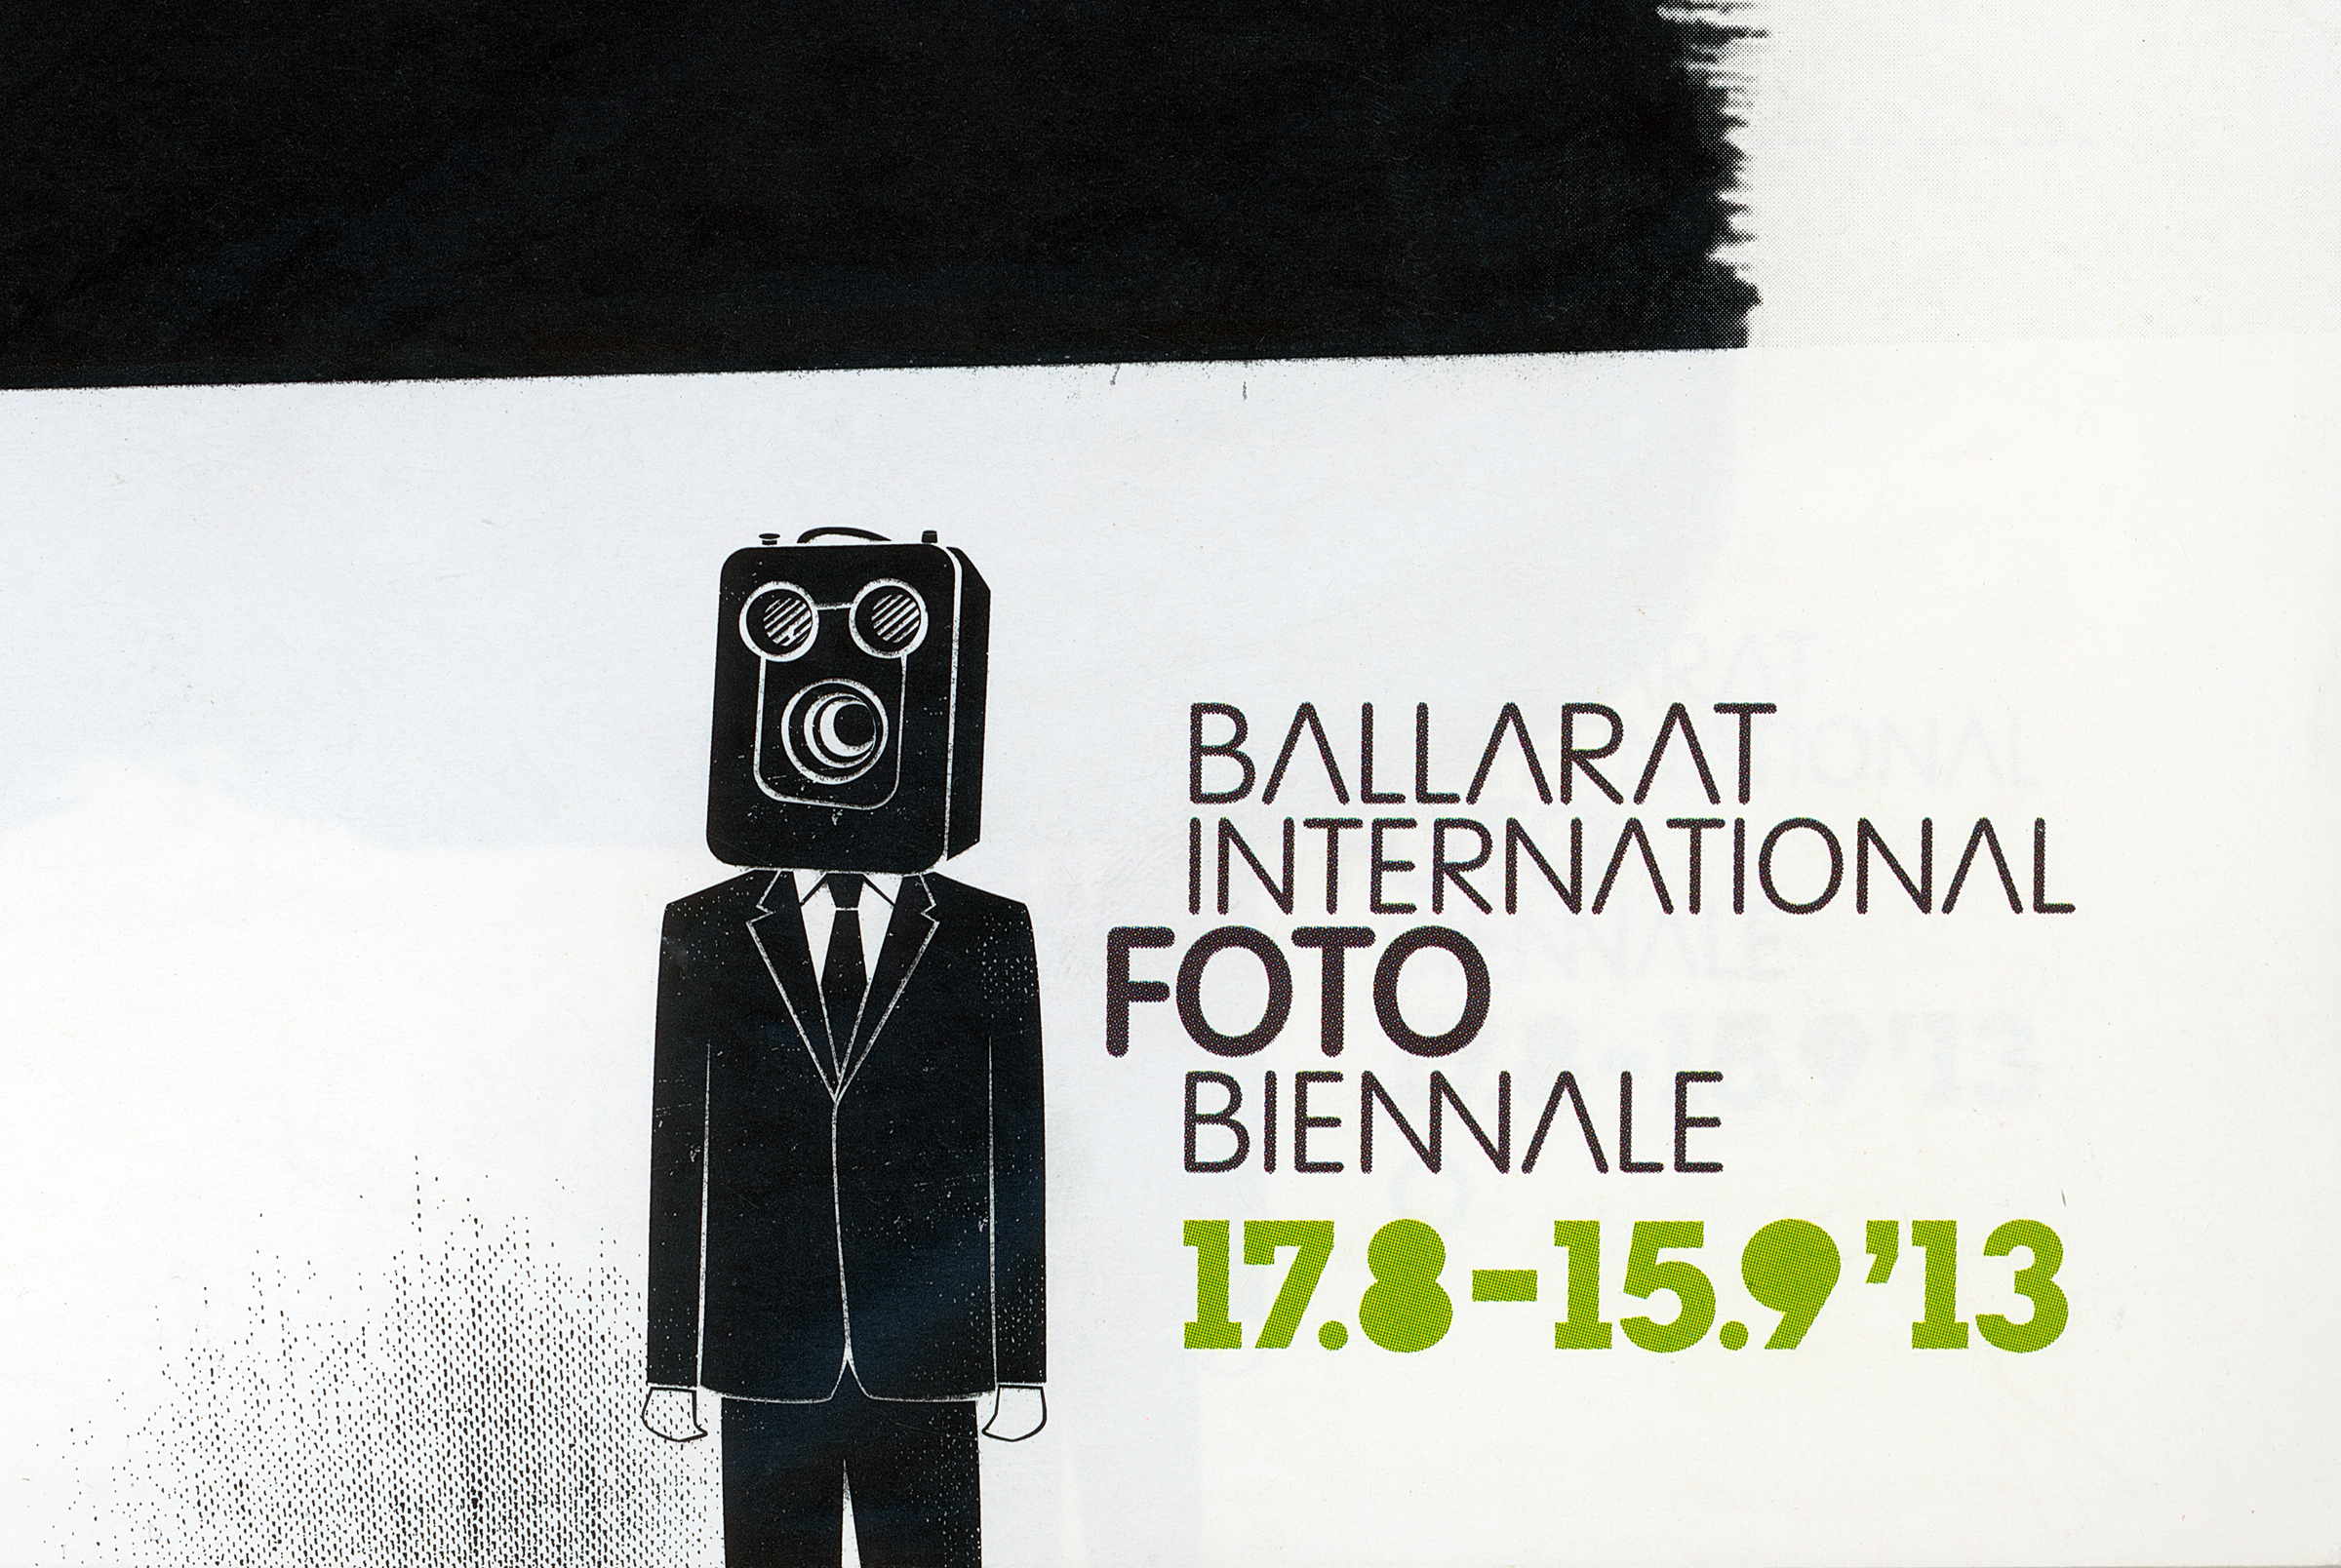  Was it a Dream -  The Ballarat International Foto Biennale  2013 - Ballarat, Australia 